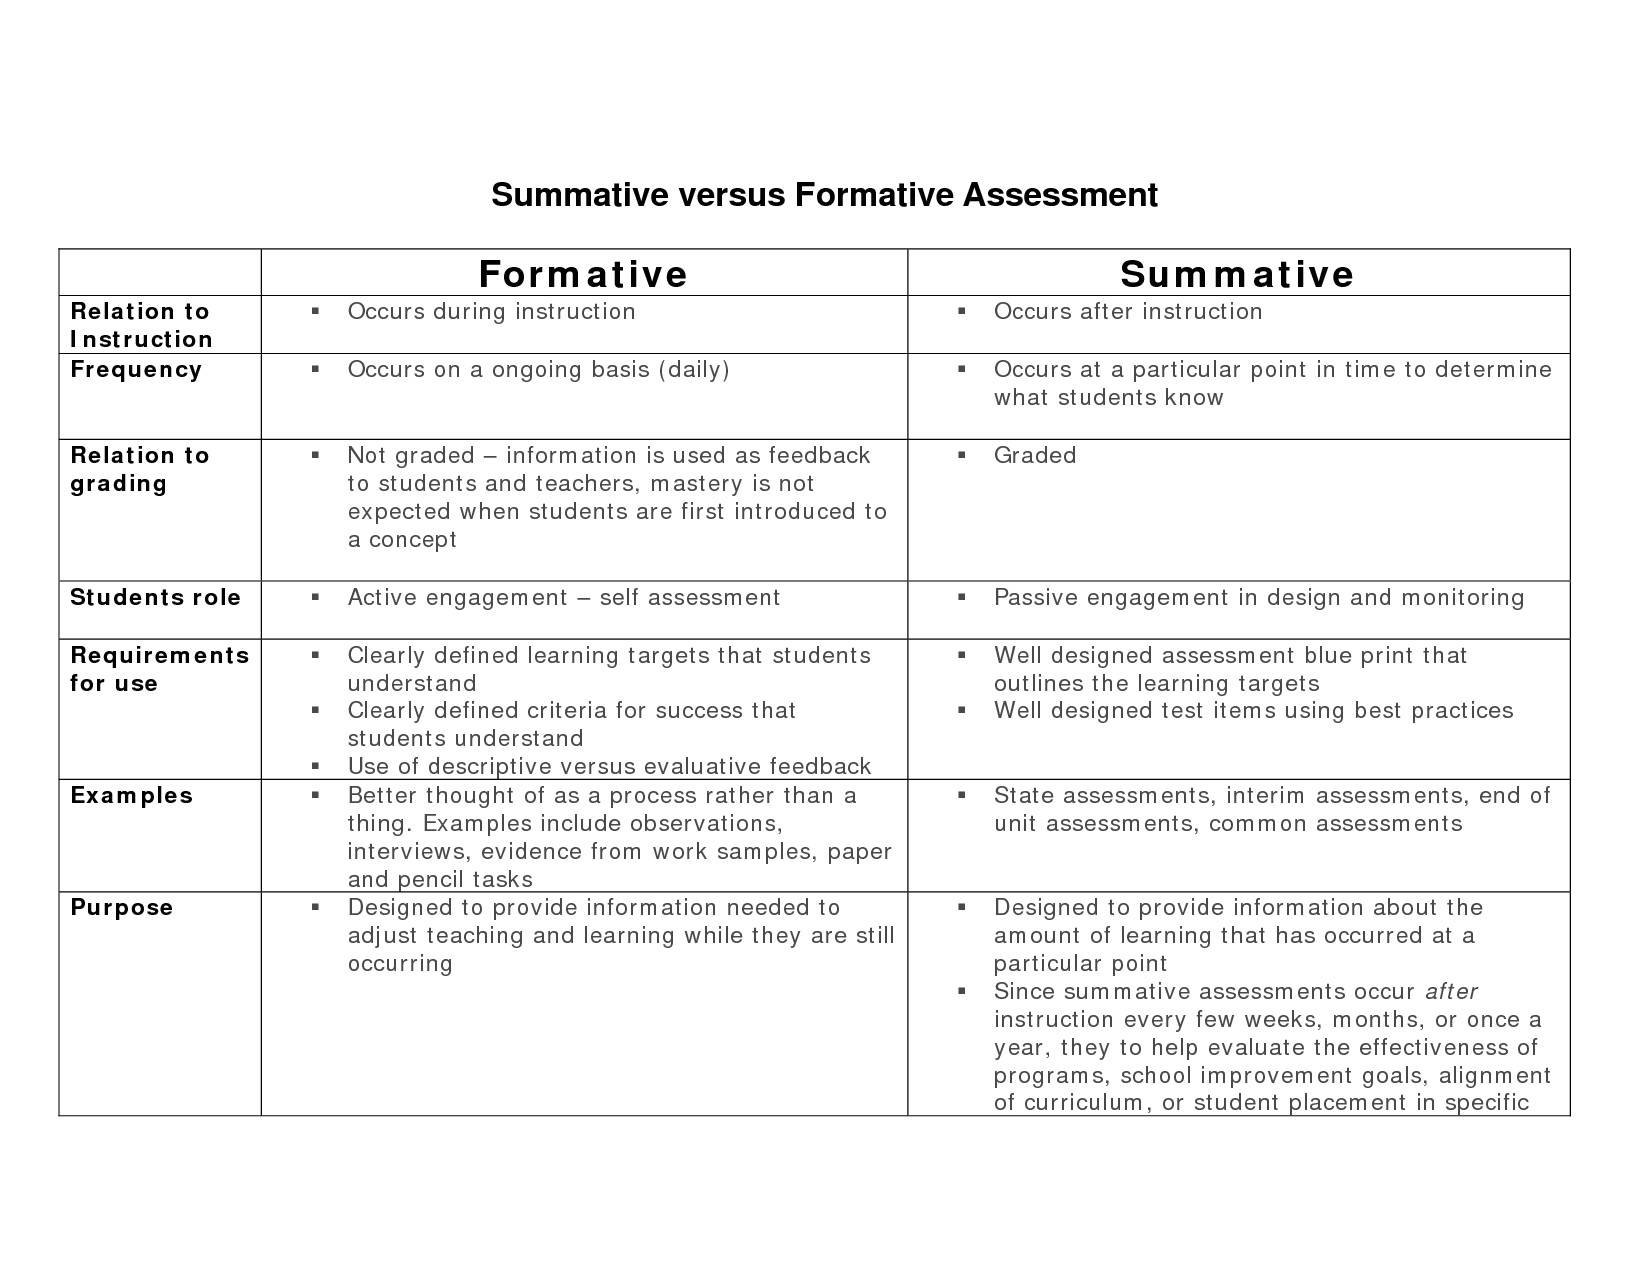 Summative assessment Template formative Vs Summative assessment Team Of Collaborators